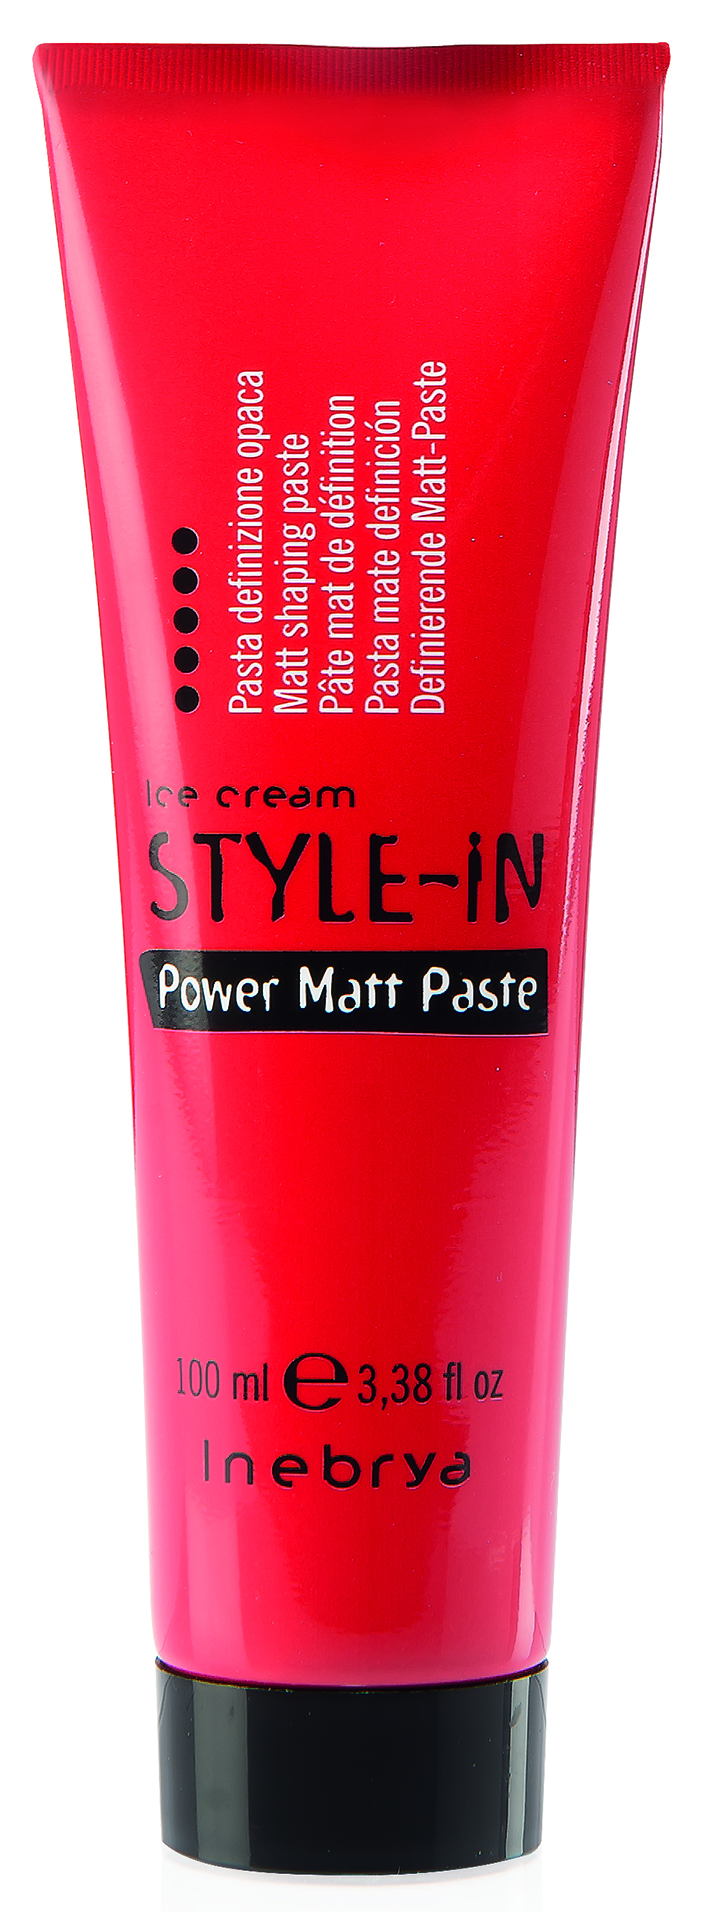 Style in Power Matt Paste, 100ml9